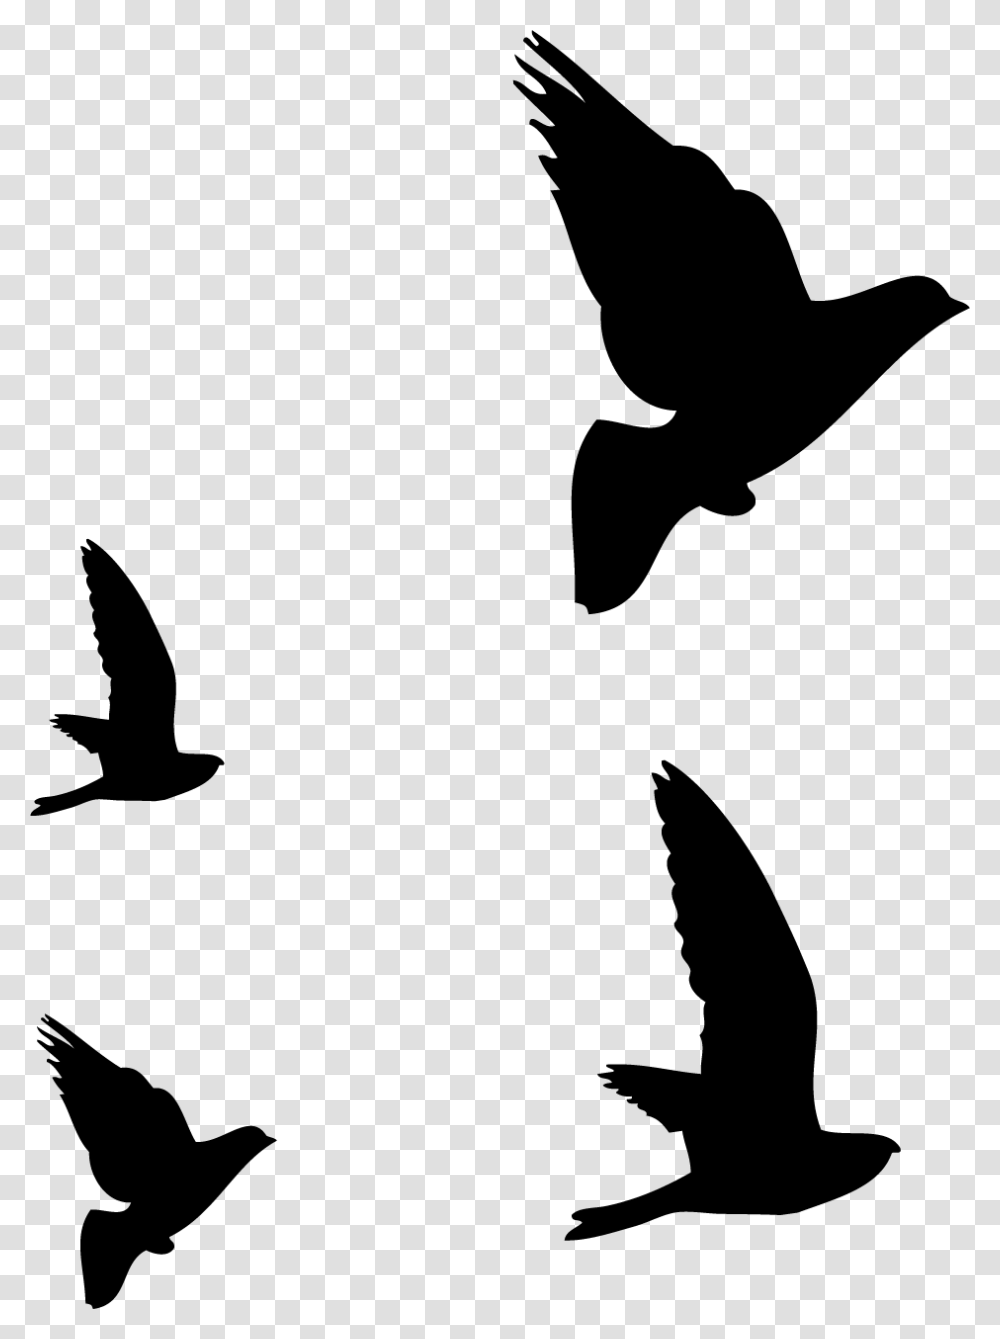 Silueta Pajaros Image, Silhouette, Stencil, Flying, Bird Transparent Png